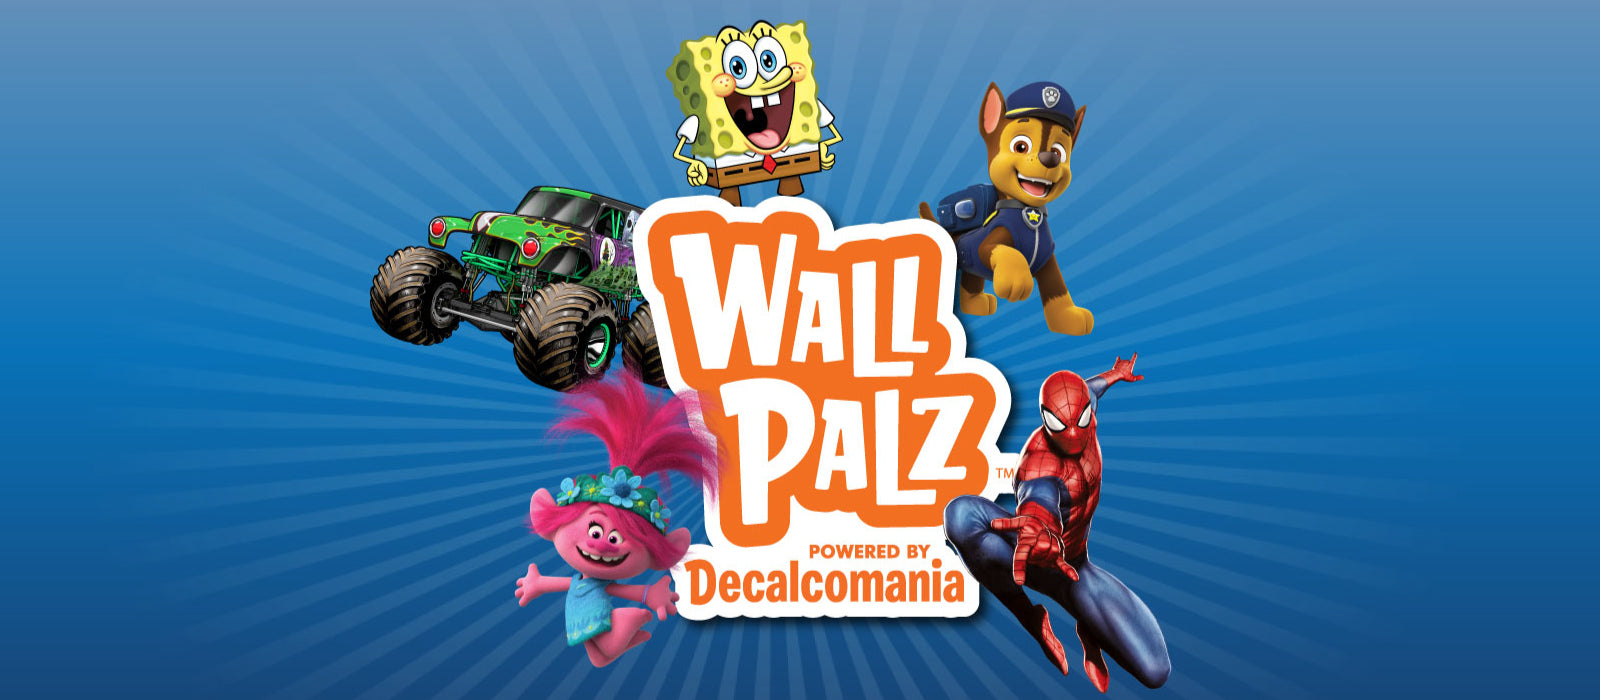 Wall Palz Disney Lilo and Stitch Wall Decals - Stitch Wall